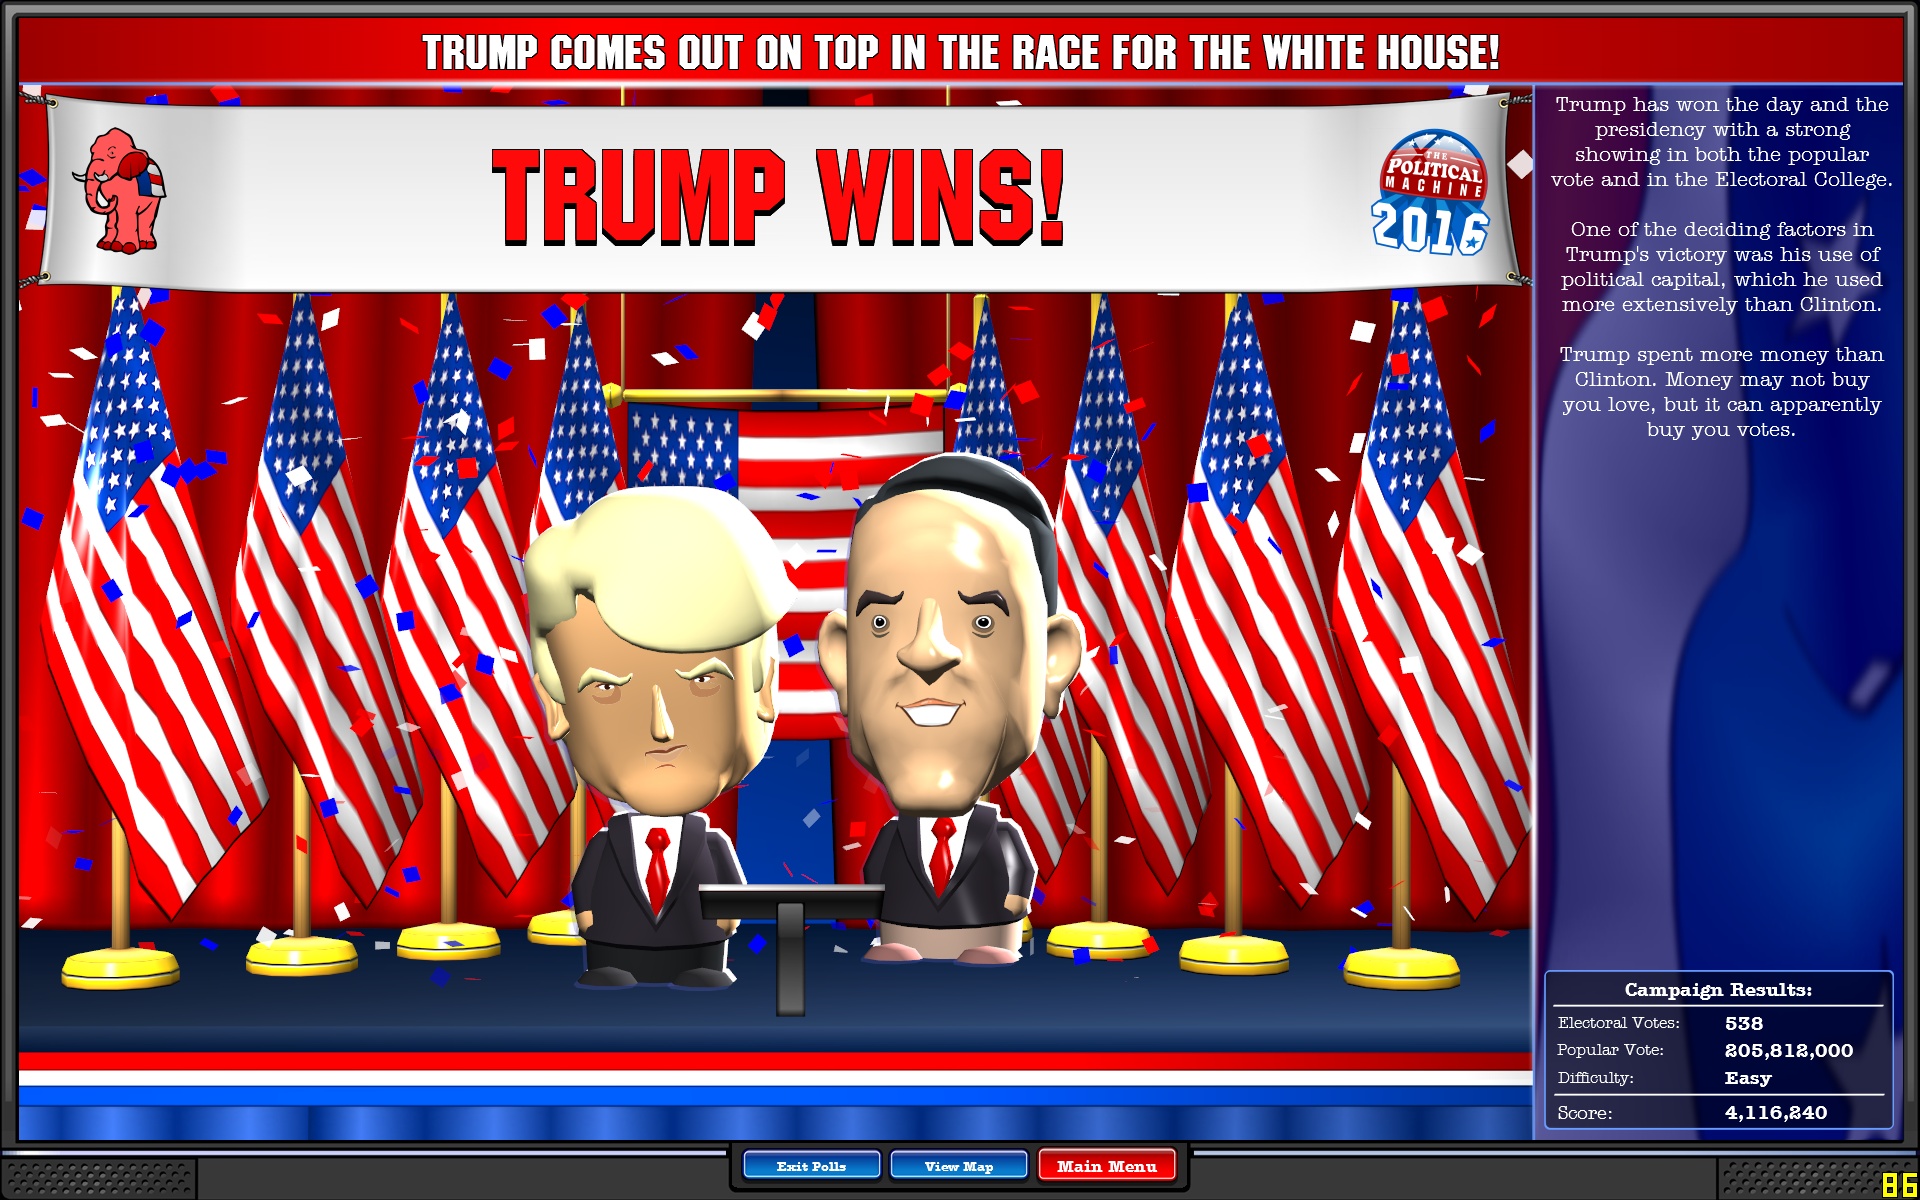 The Political Machine 2016 screenshot